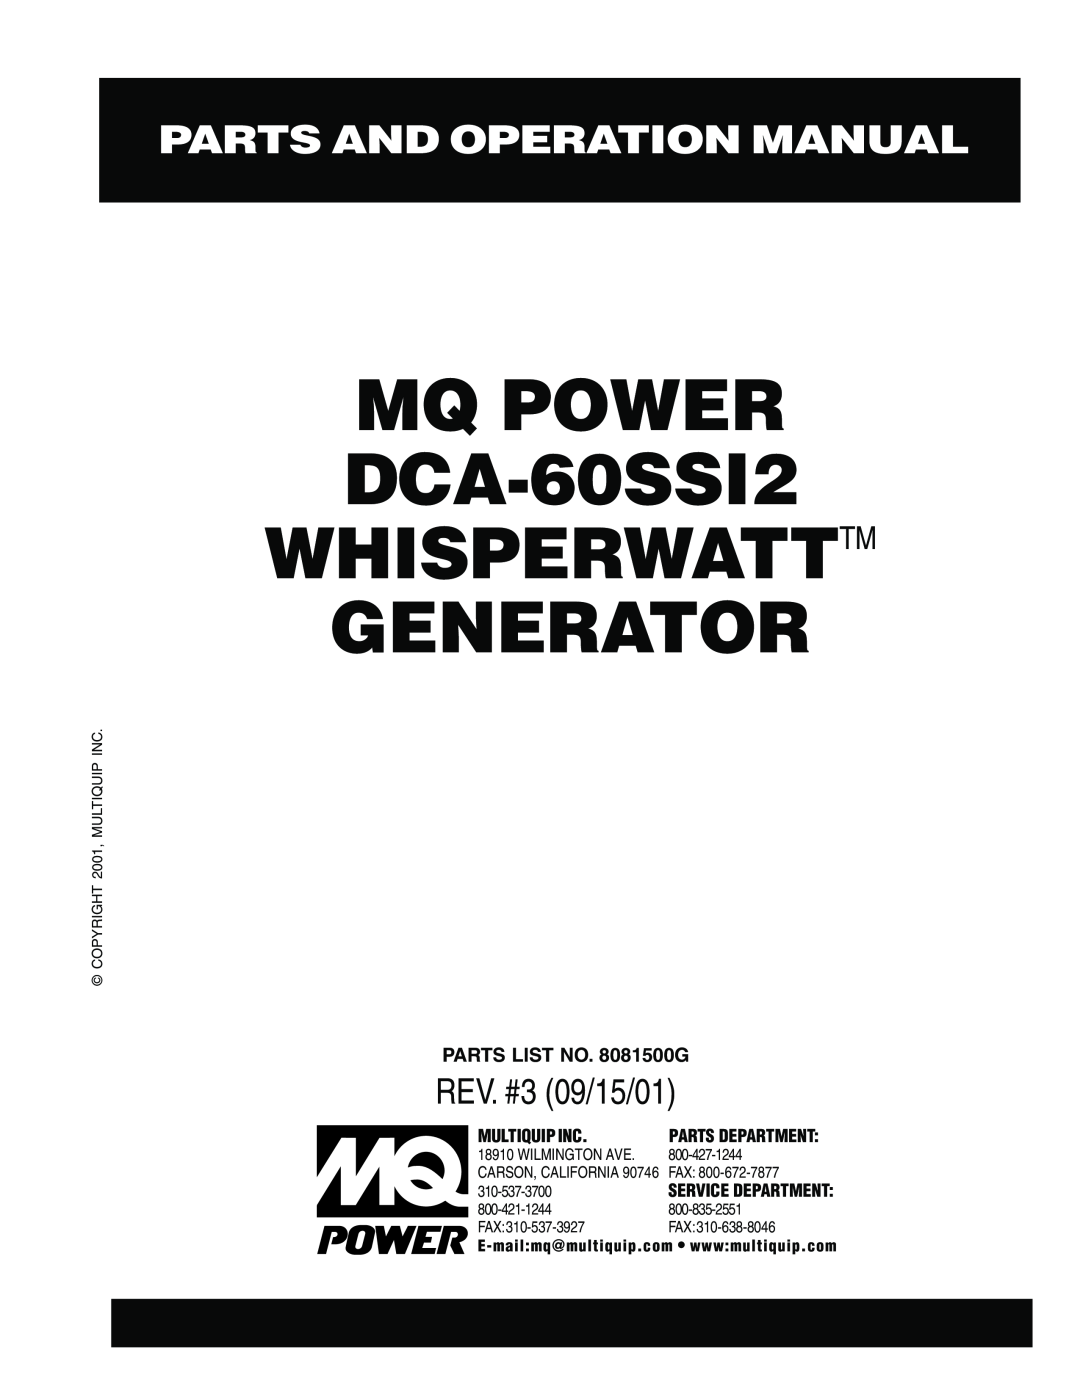 Multiquip DCA-60SS12 operation manual Parts And Operation Manual, MQ POWER DCA-60SSI2 WHISPERWATTTM GENERATOR 